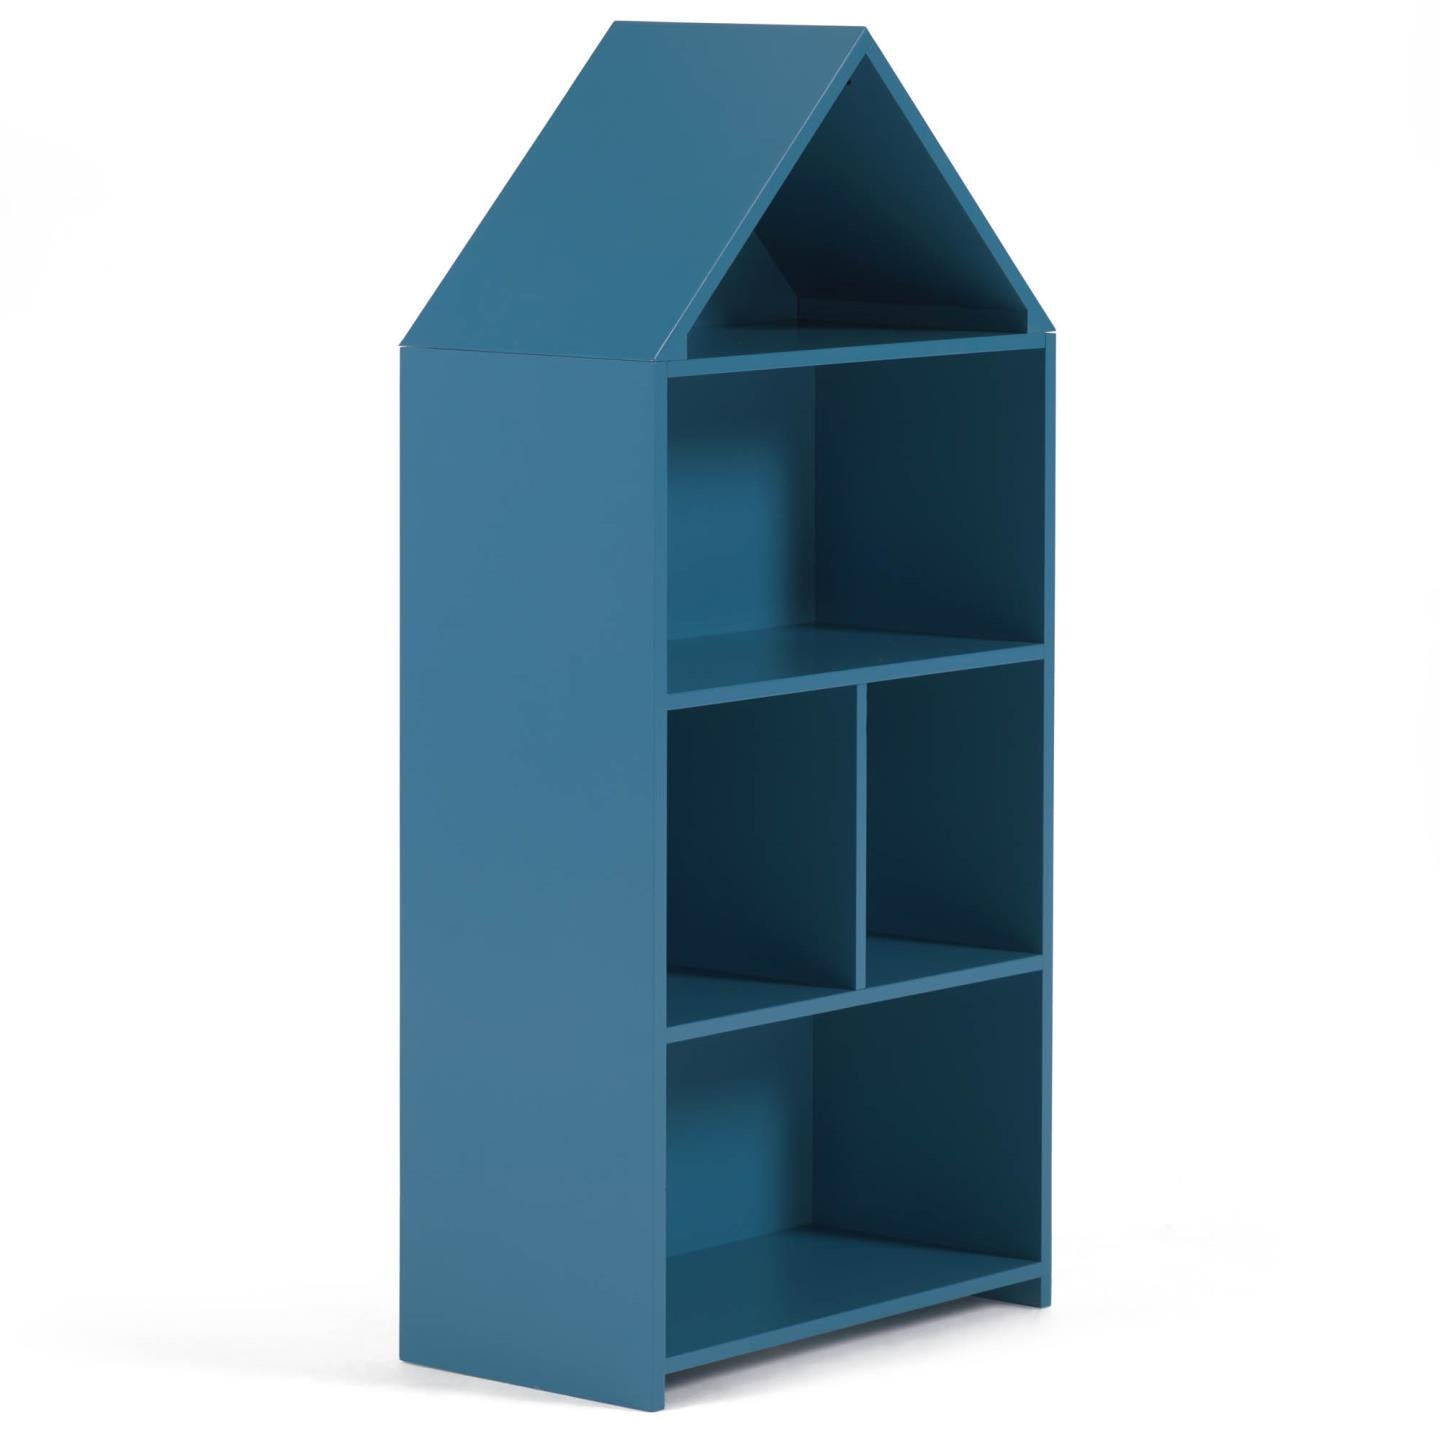 Celeste kids’ little house shelf unit in blue MDF 50 x 105 cm